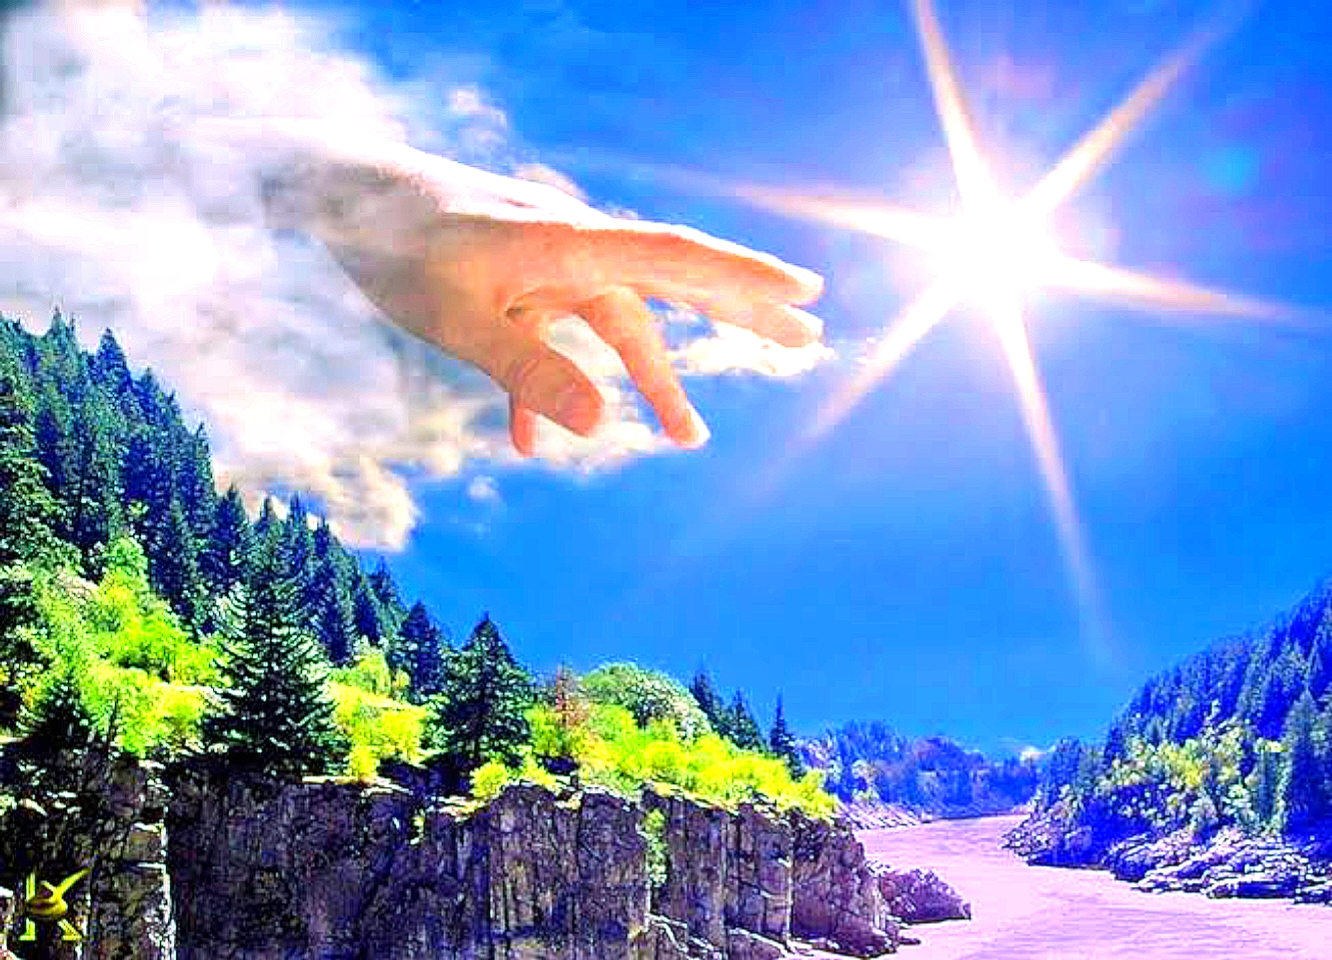 THE VALIANT HAND OF GOD